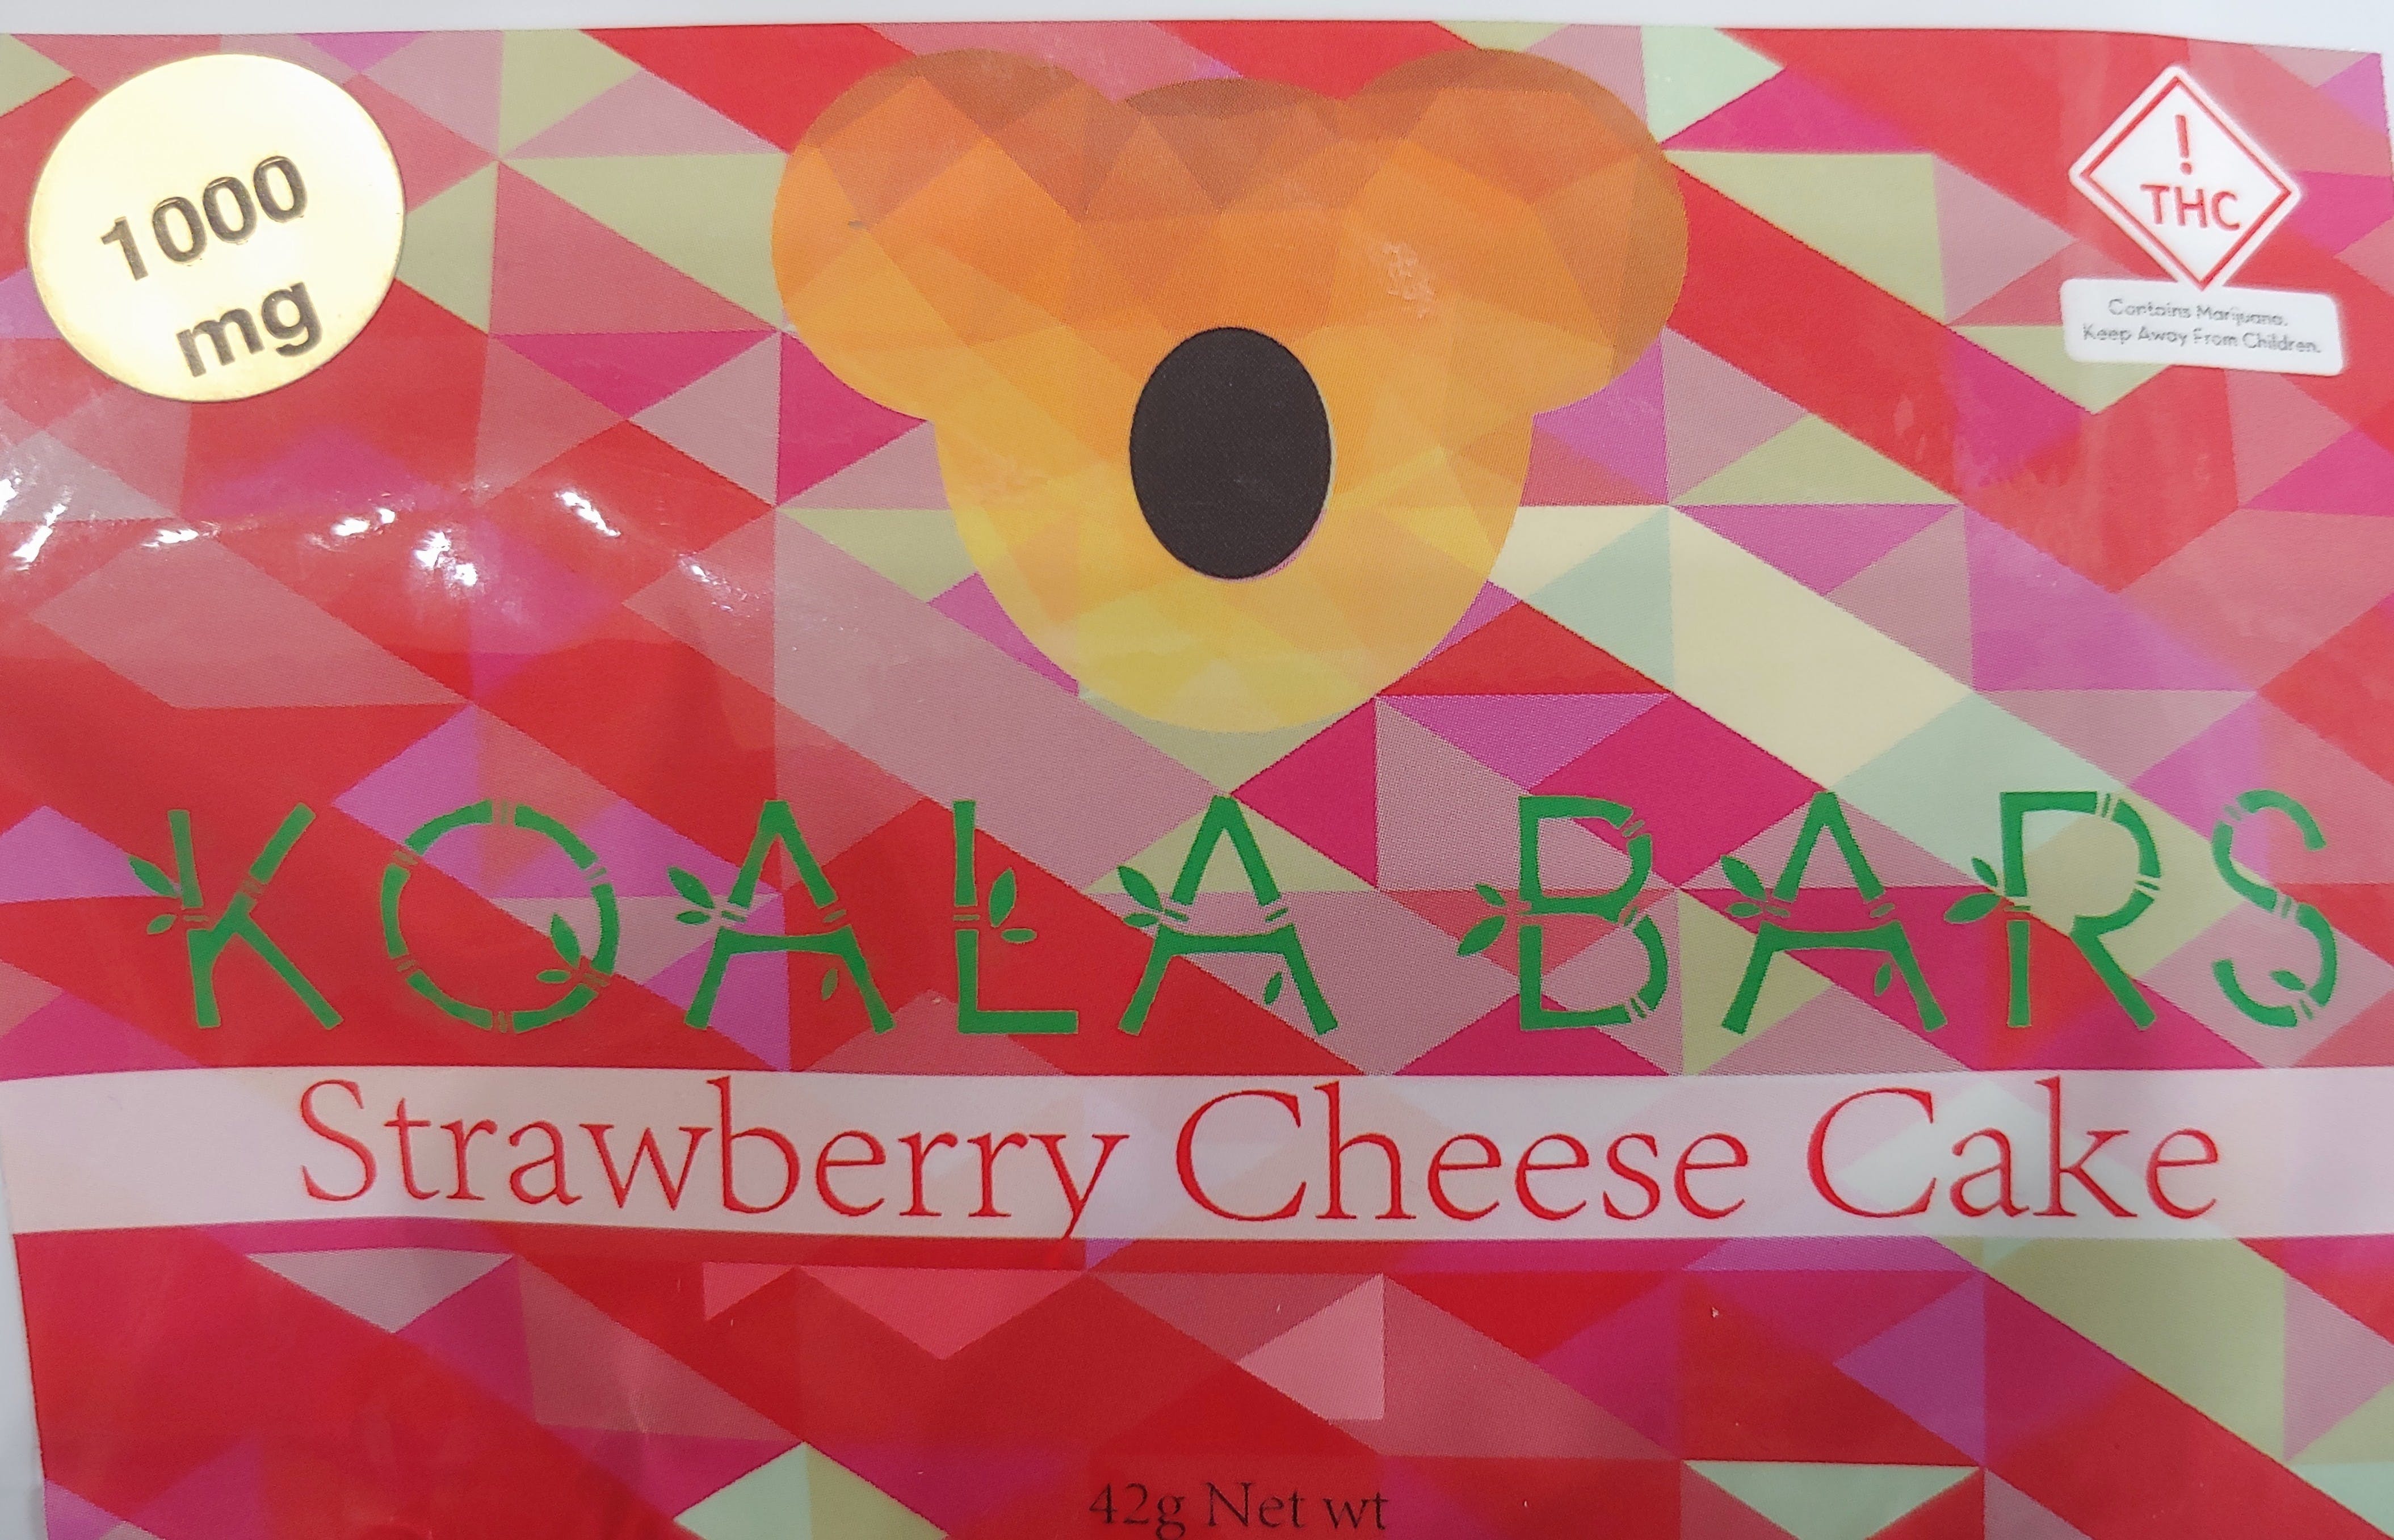 edible-koala-bars-strawberry-cheesecake-1000mg